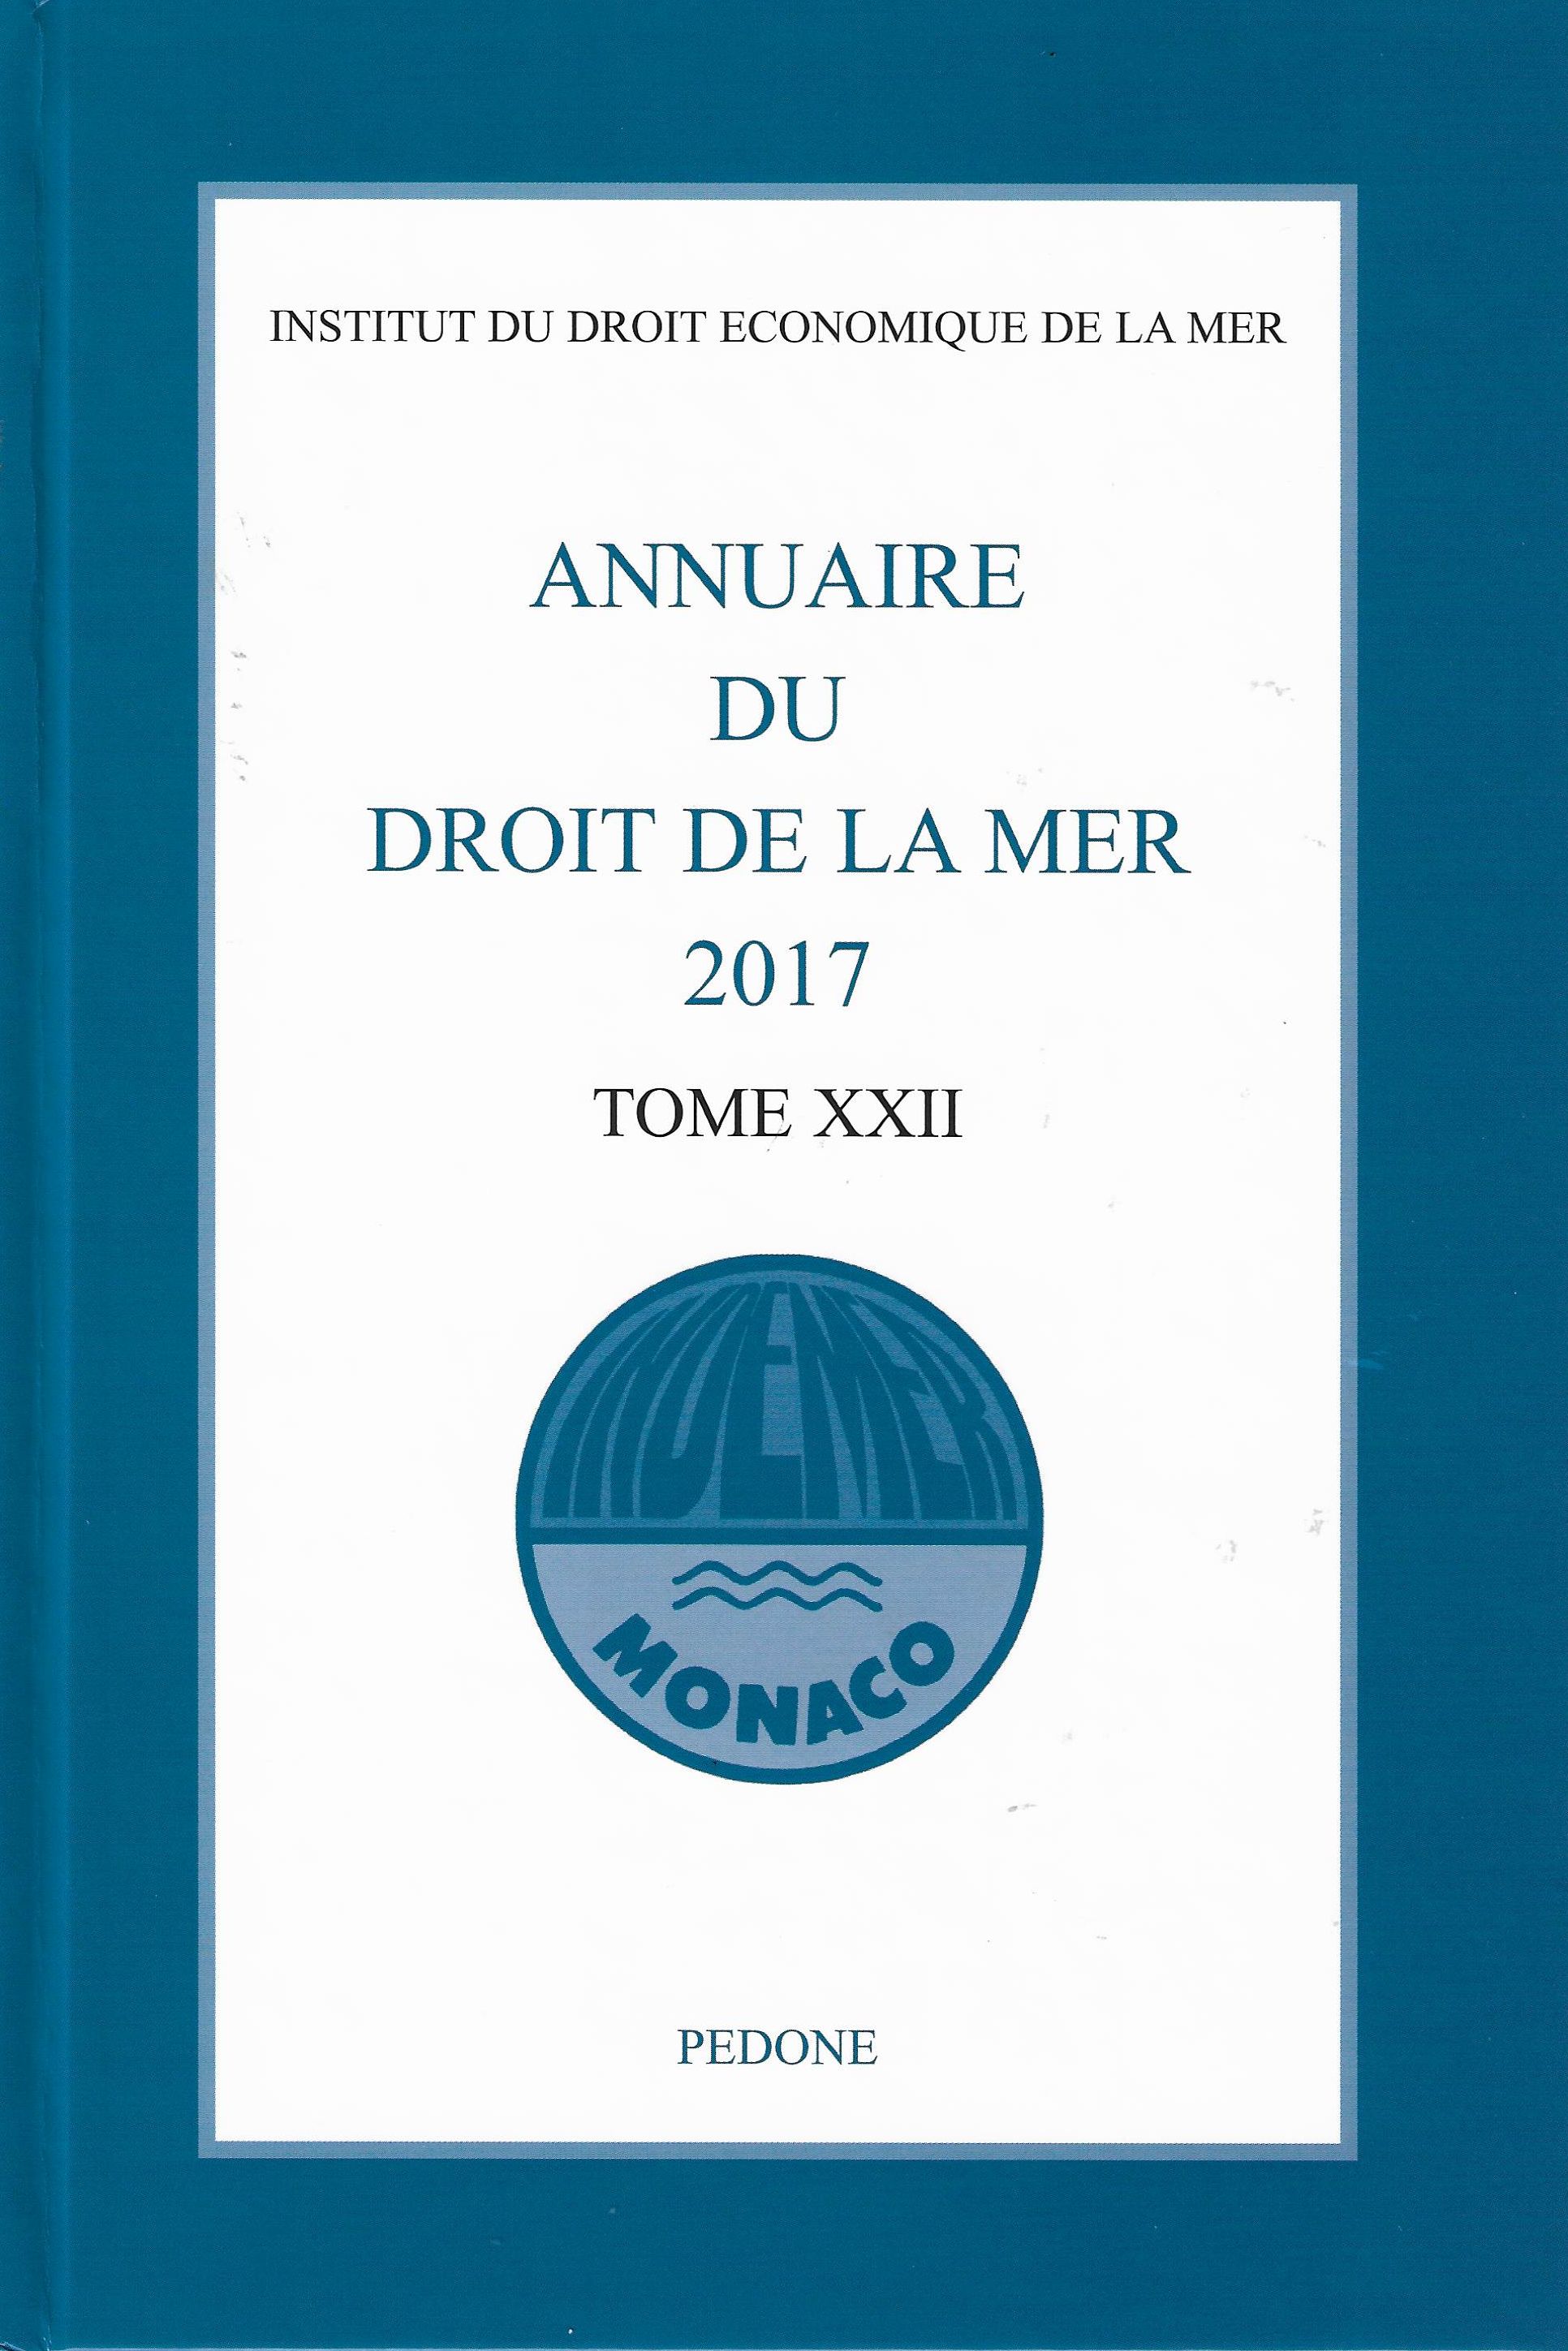 Imagen de portada del libro Annuaire du droit de la mer 2017